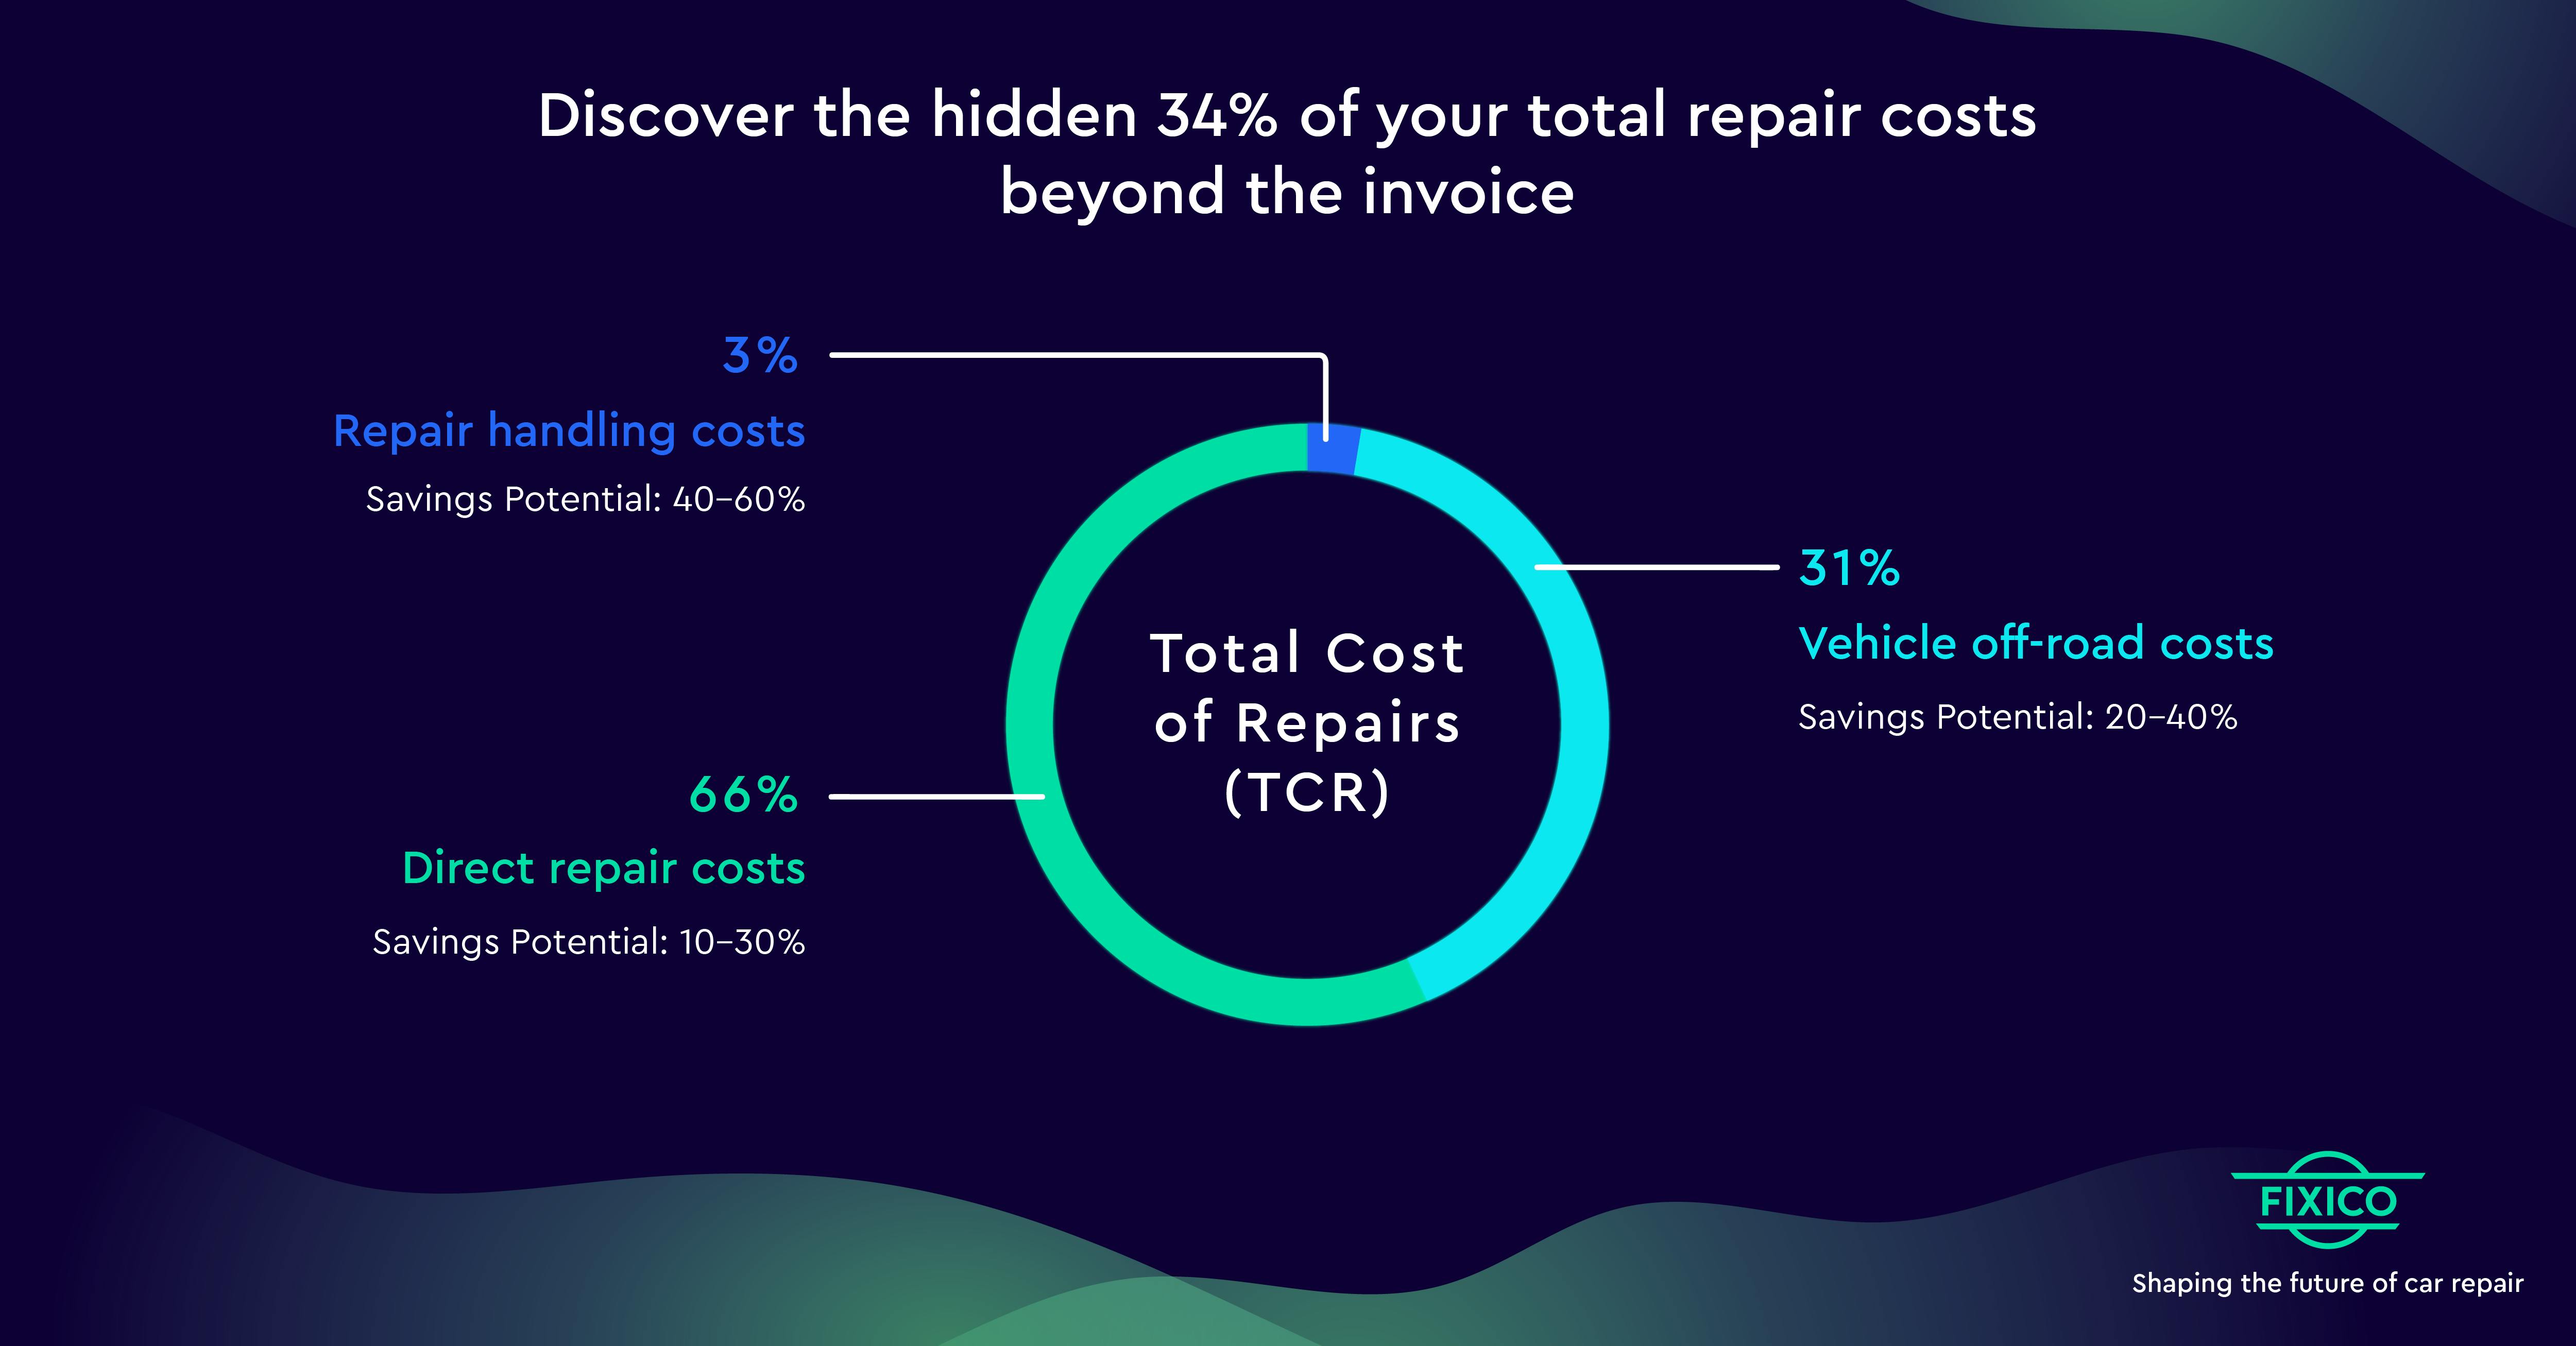 Discover car repair savings beyond the repairer's invoice